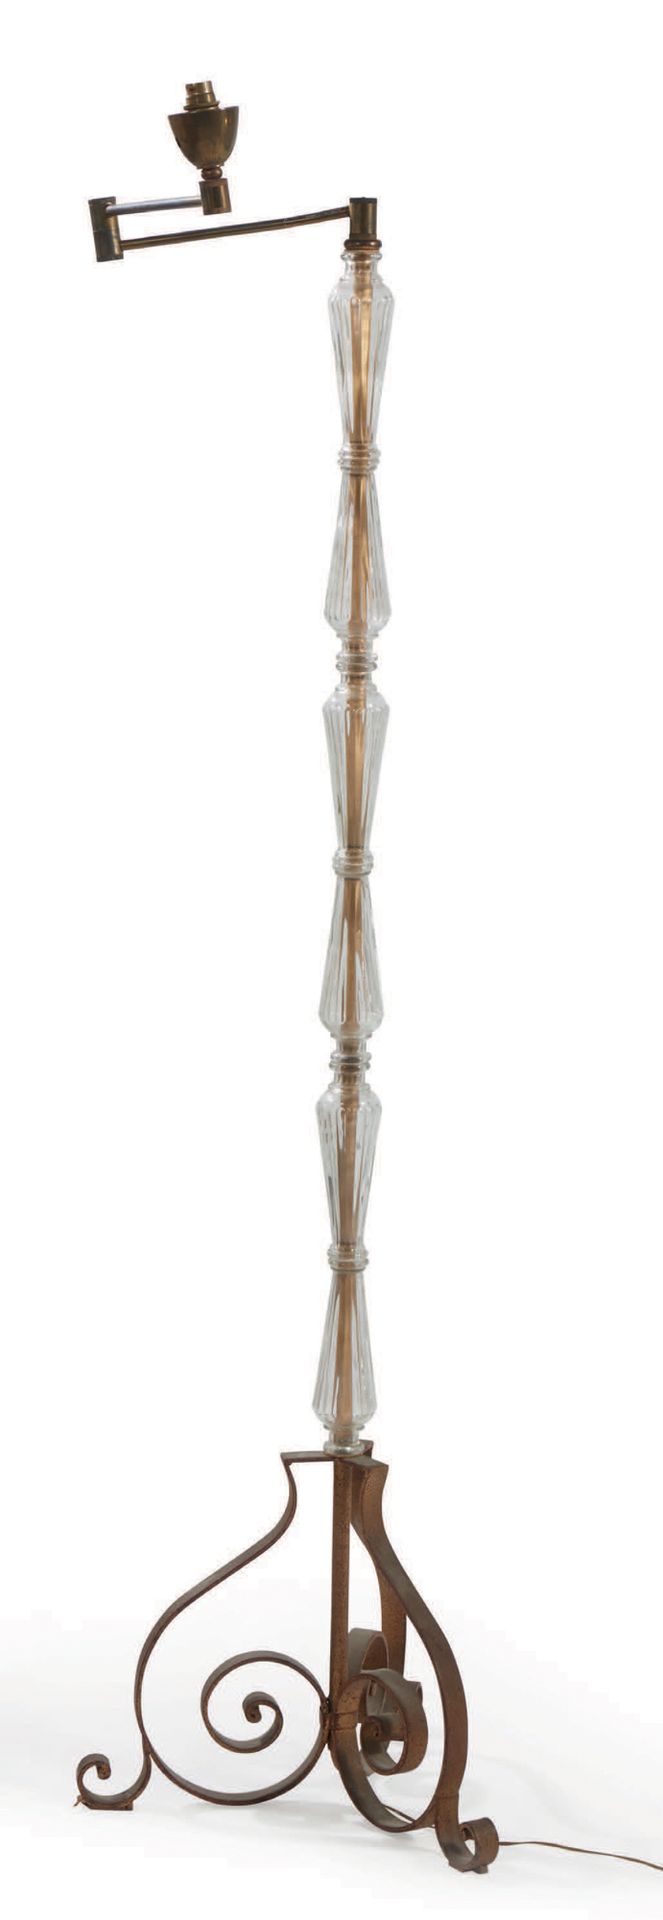 TRAVAIL FRANÇAIS 落地灯，圆柱形的灯杆上装饰着半透明的玻璃栏杆，放在由金属条组成的底座上，形成卷轴
高：150厘米